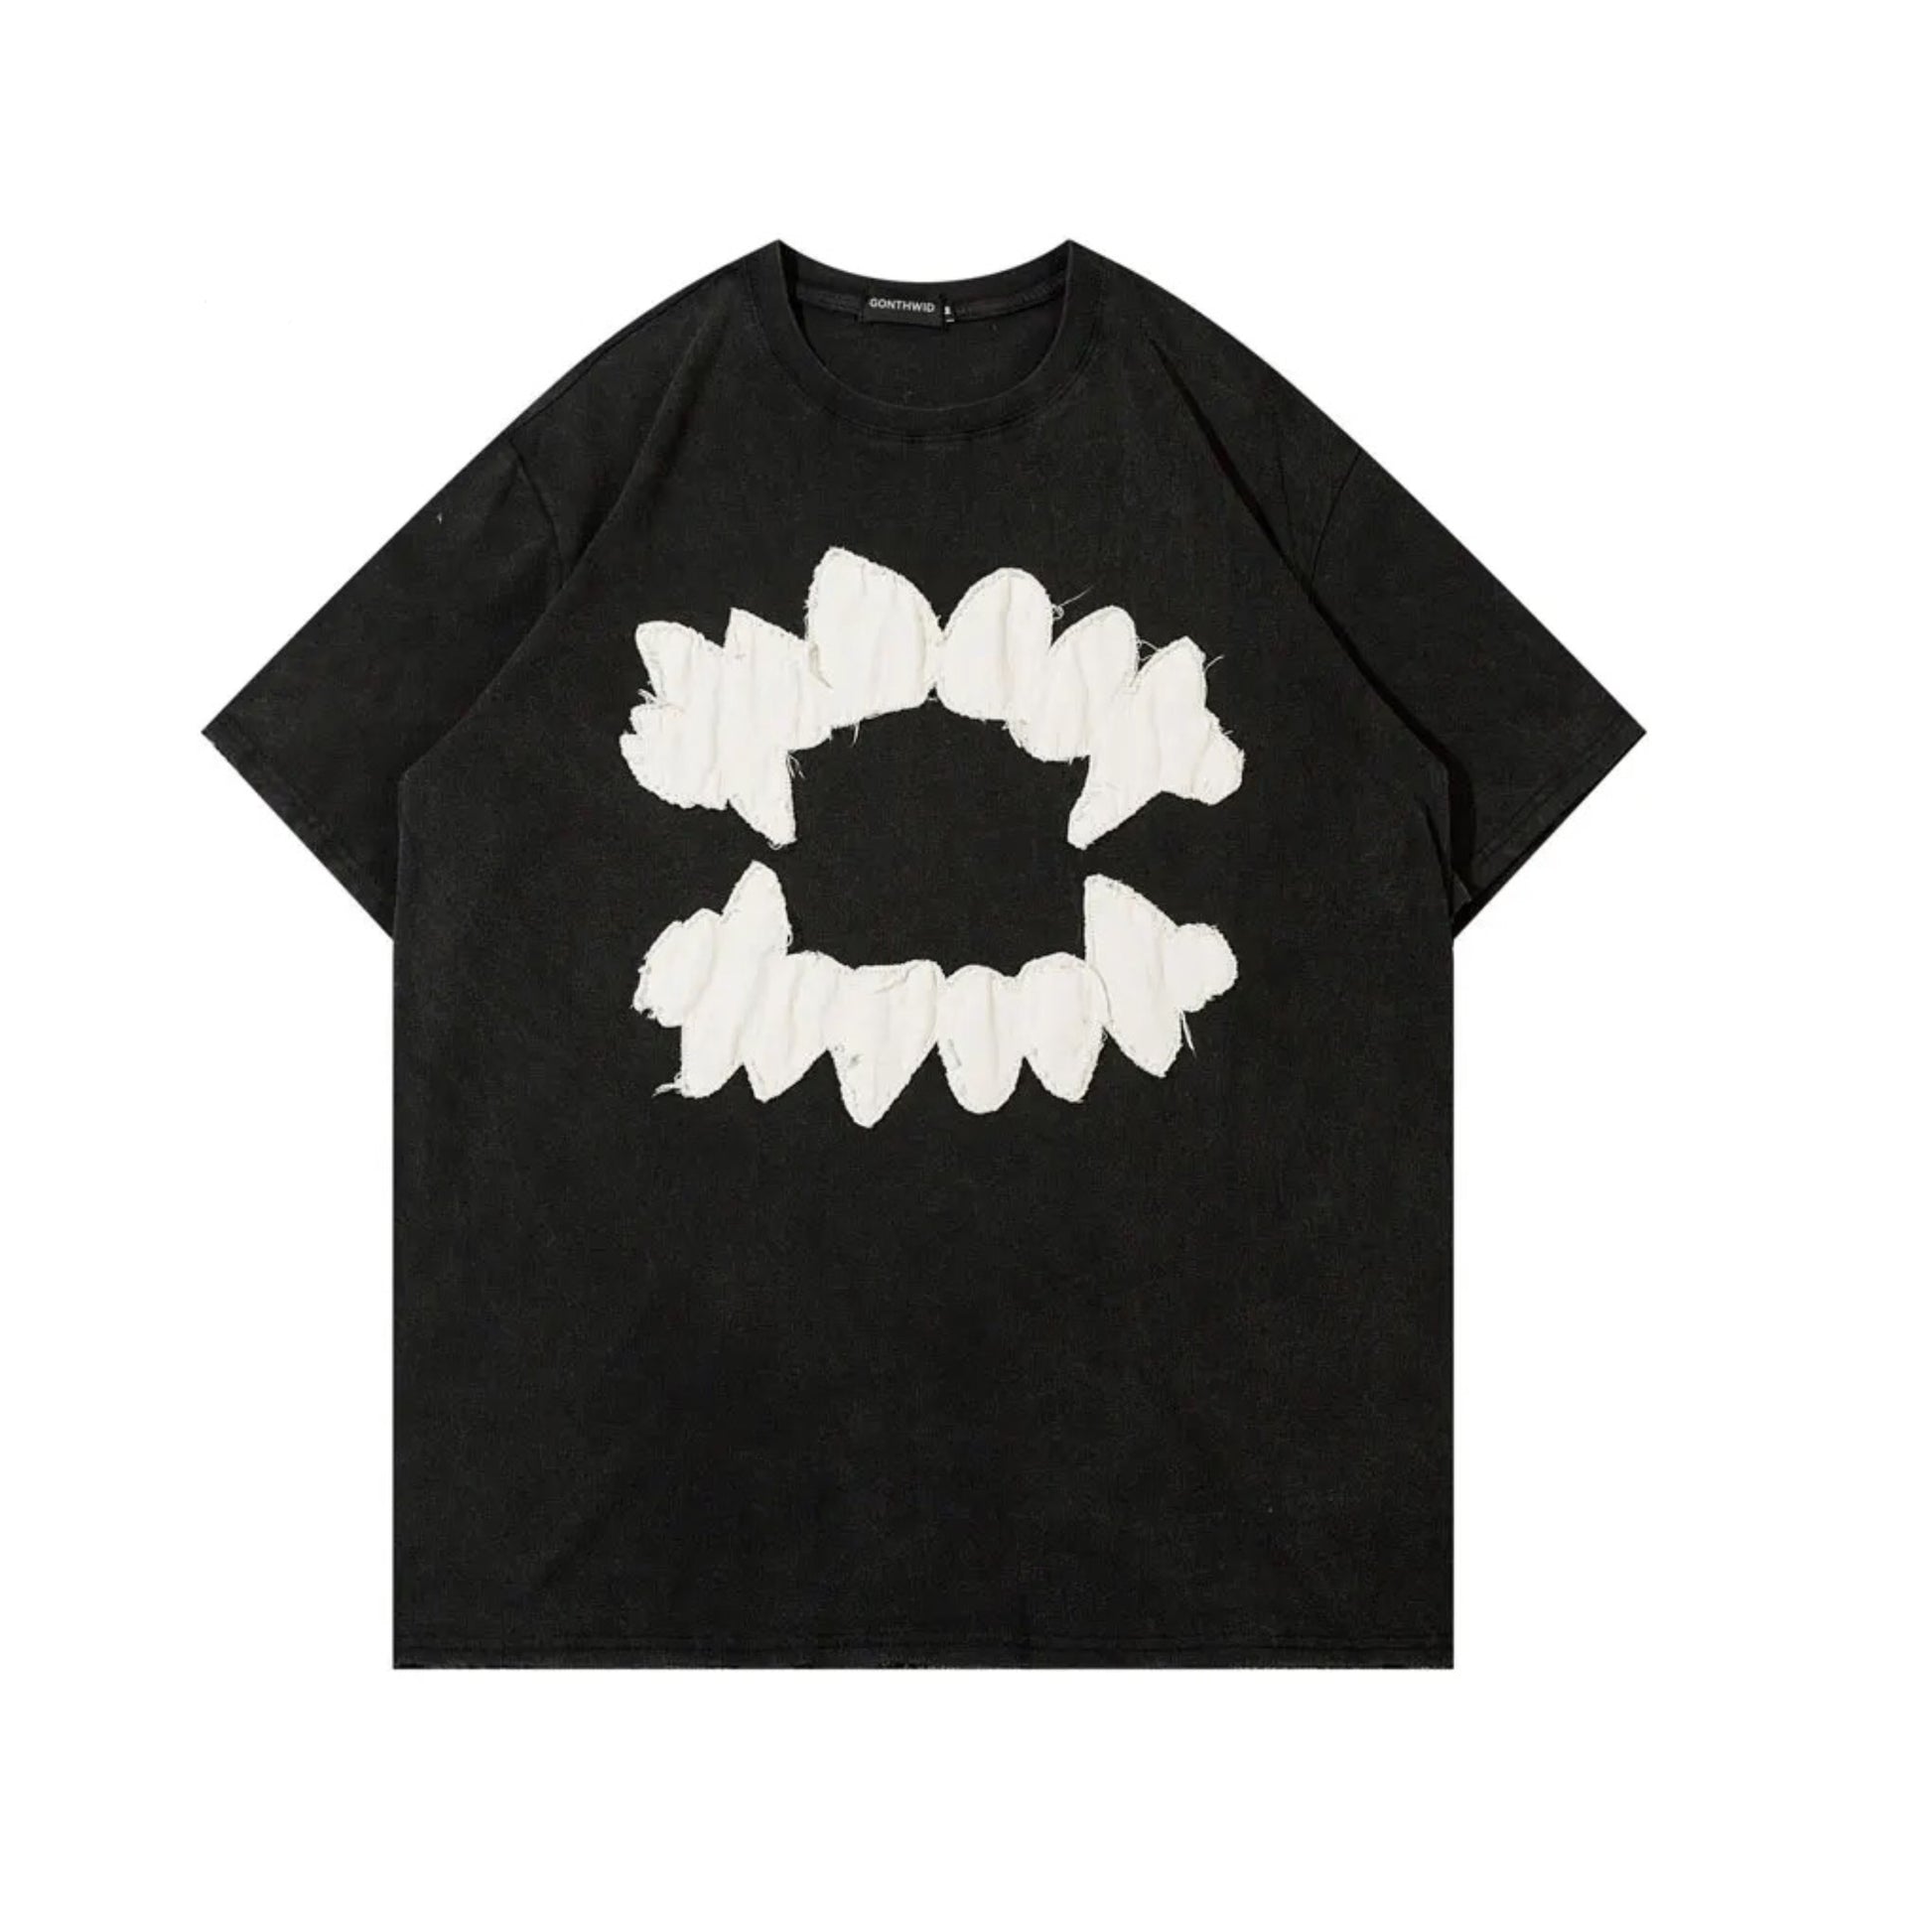 Vampire PNG Designs for T Shirt & Merch